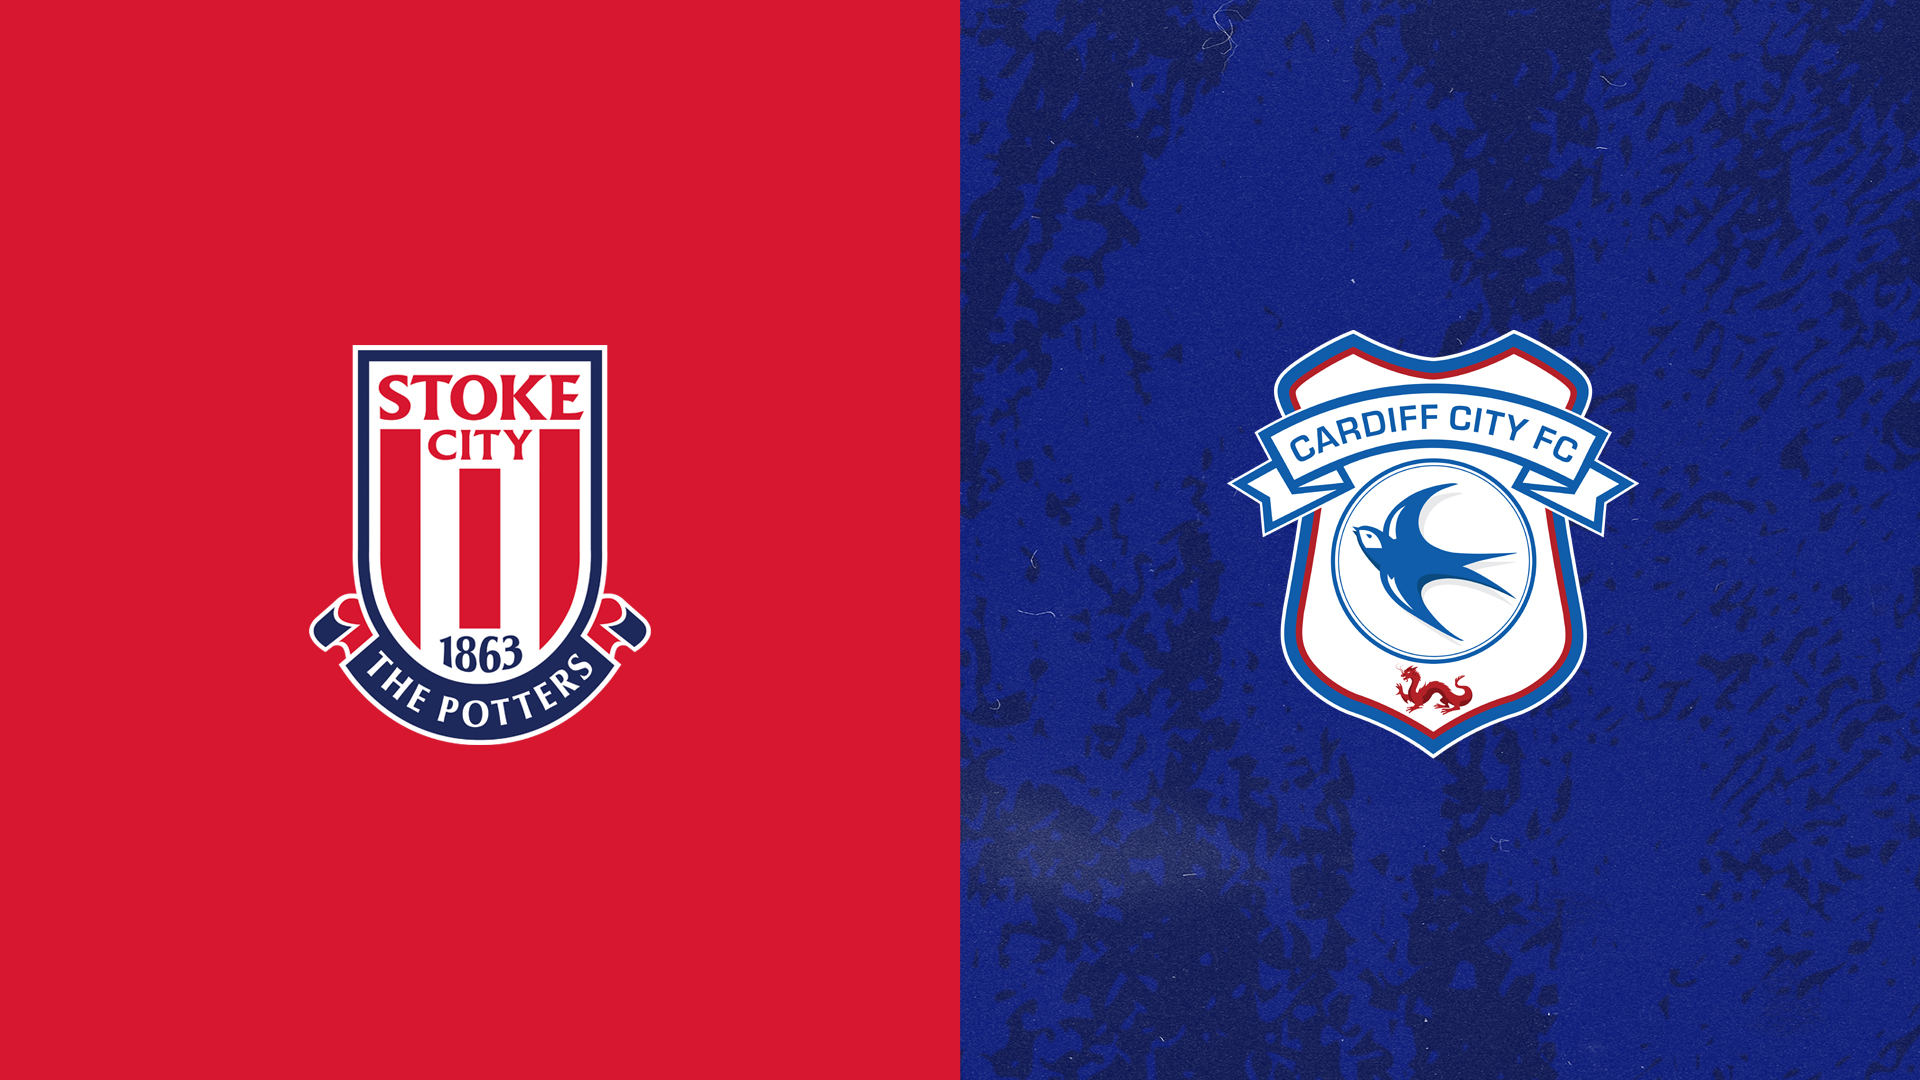 Stoke City FC - Match Pack